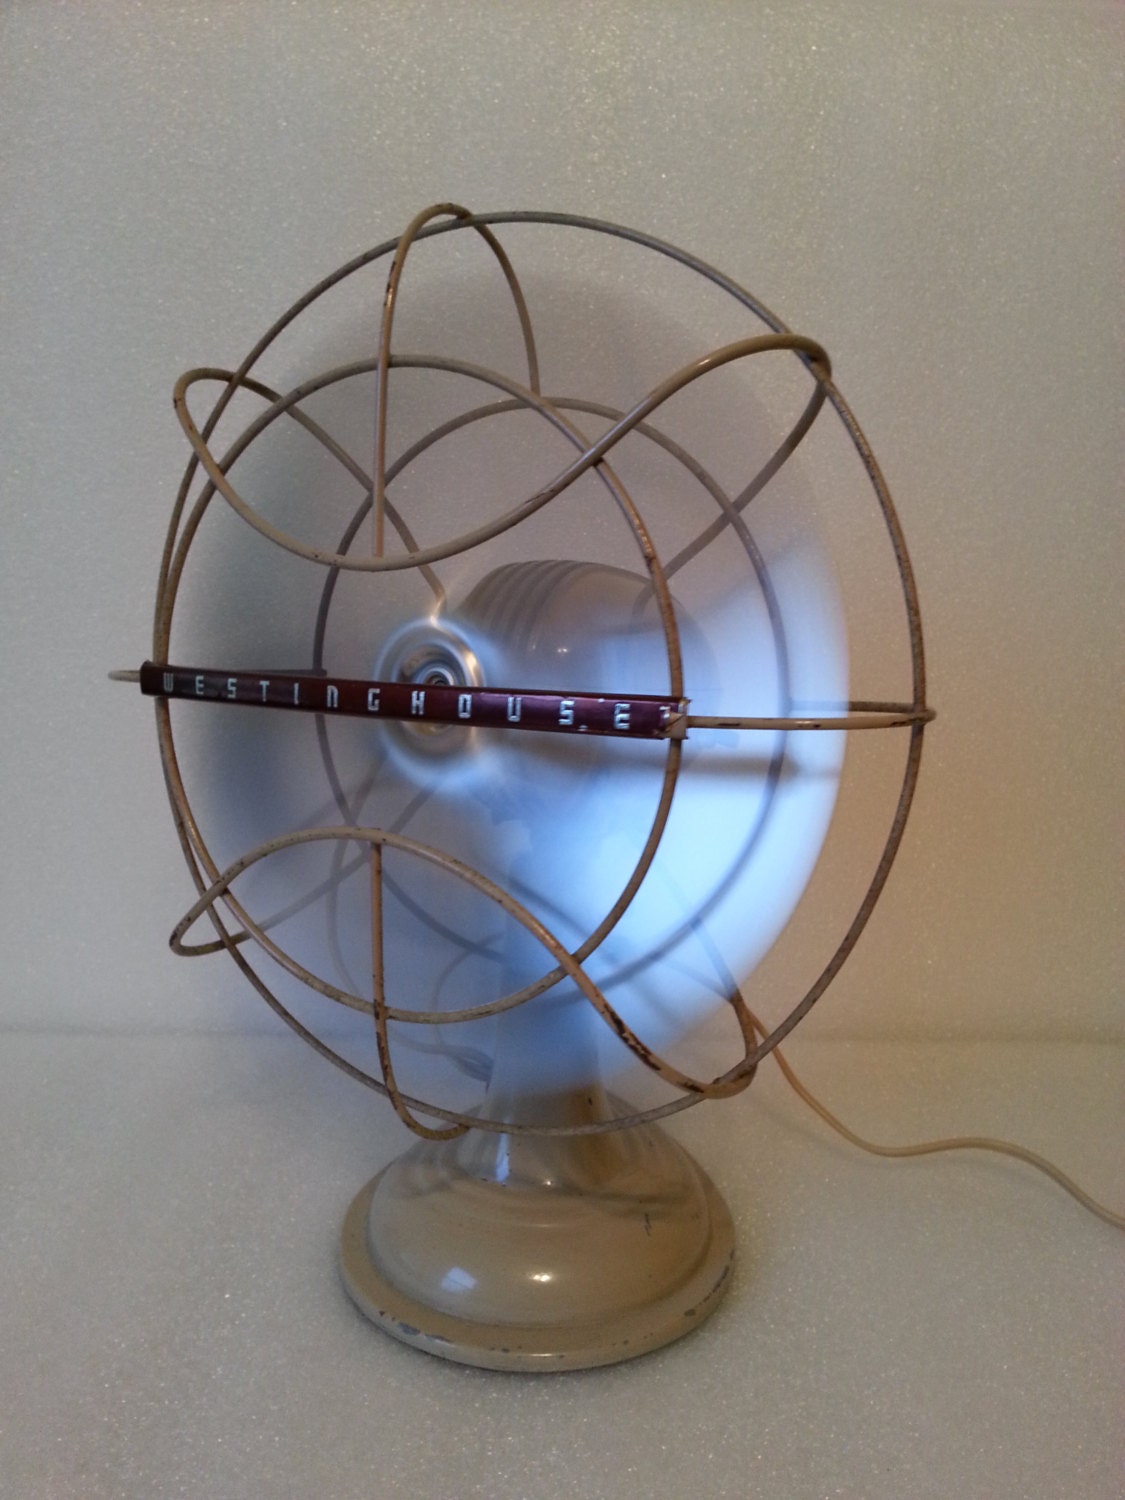 Vintage Westinghouse 10" Oscillating Table Fan